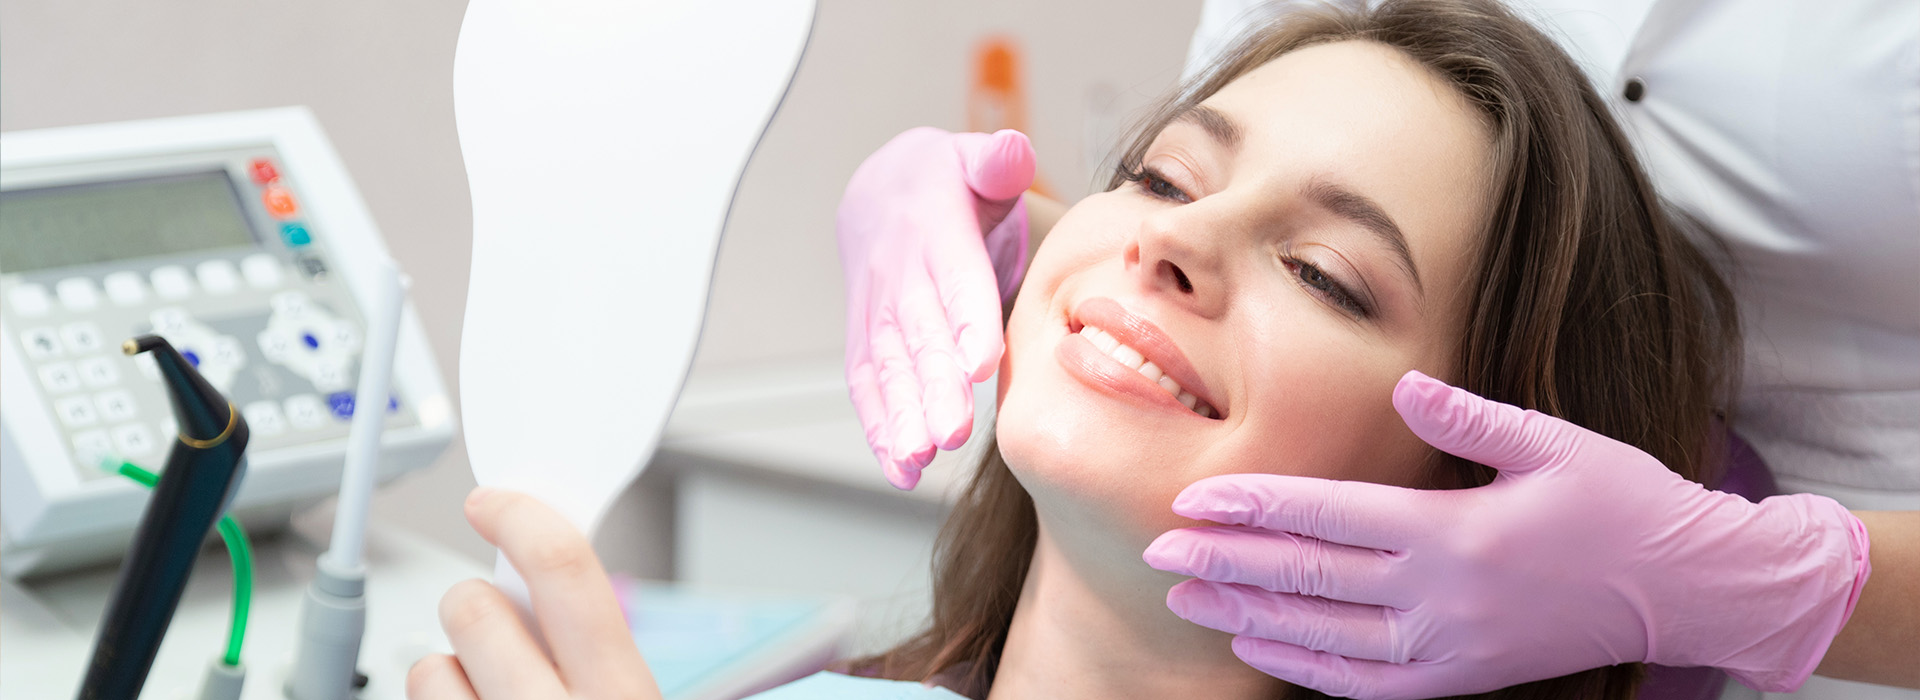 Mann Dental Care | Emergency Treatment, Oral Exams and Veneers